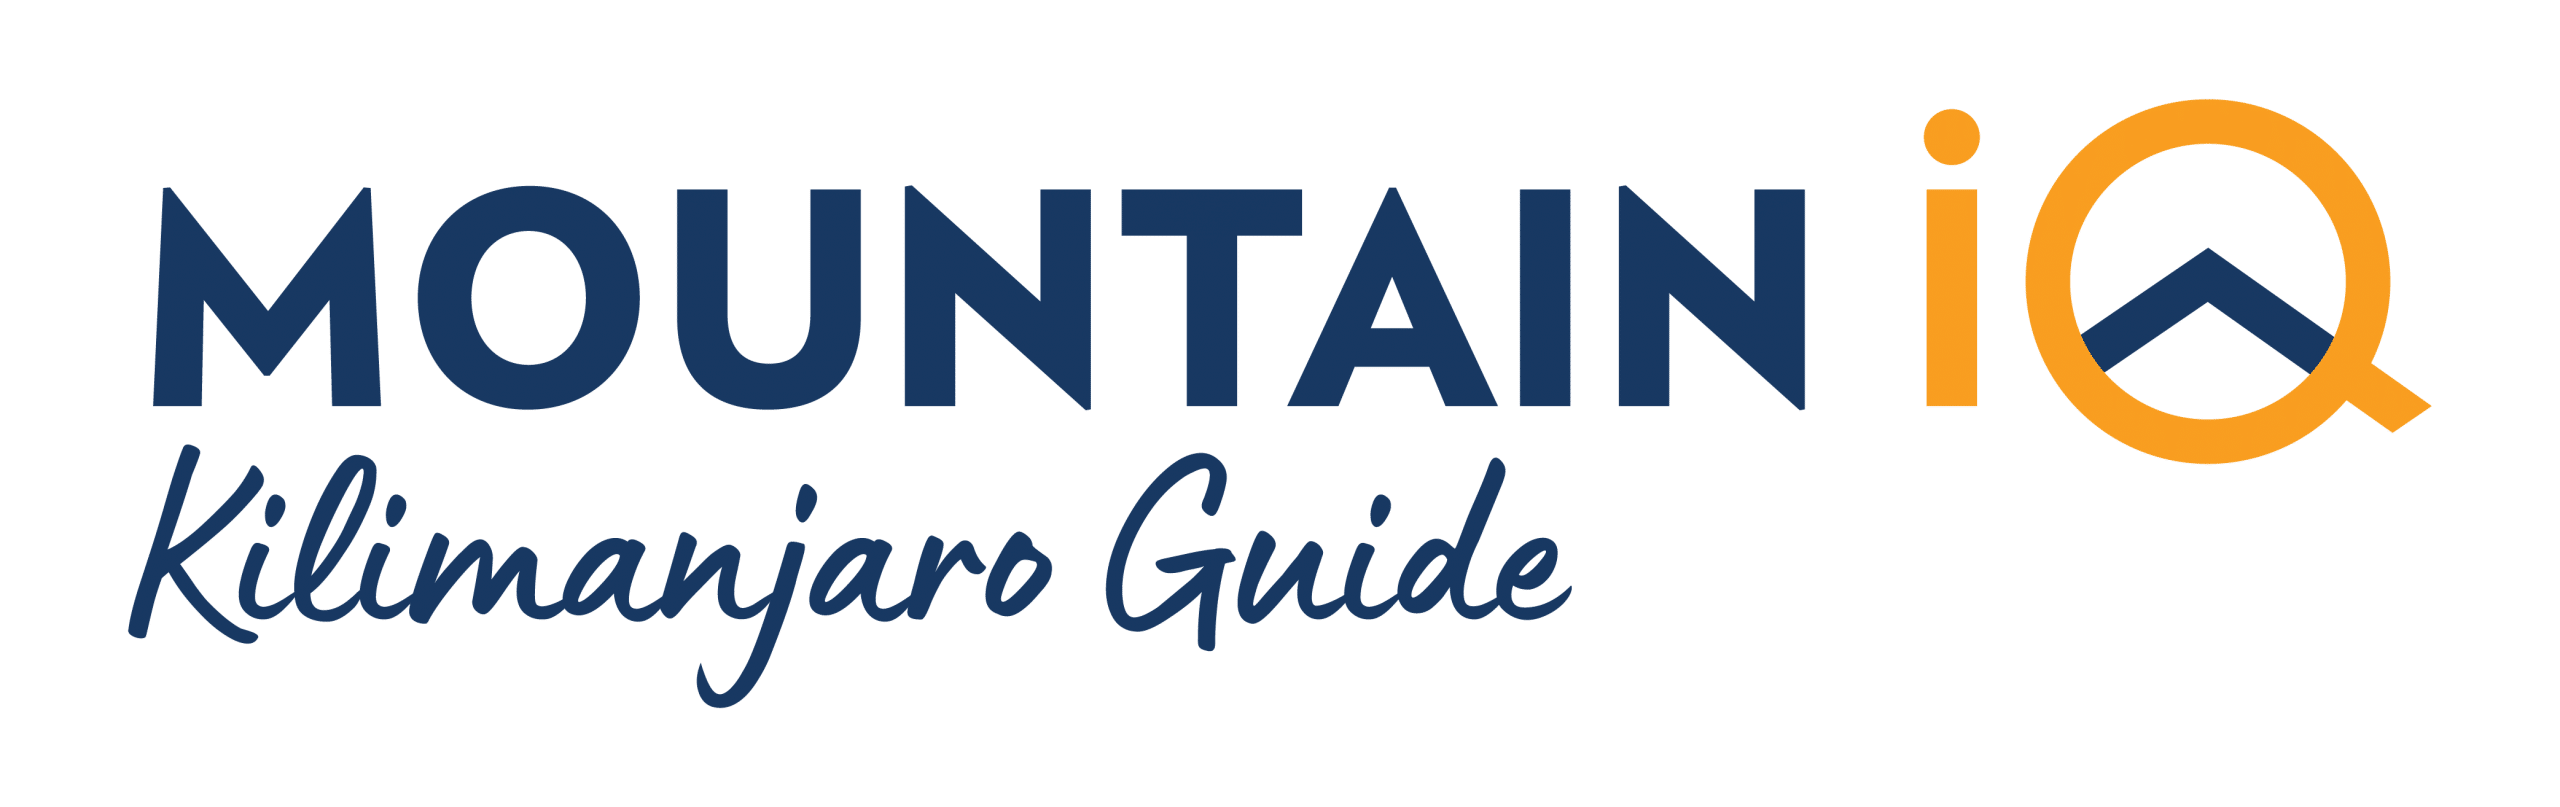 Mountain IQ Kilimanjaro Guide logo